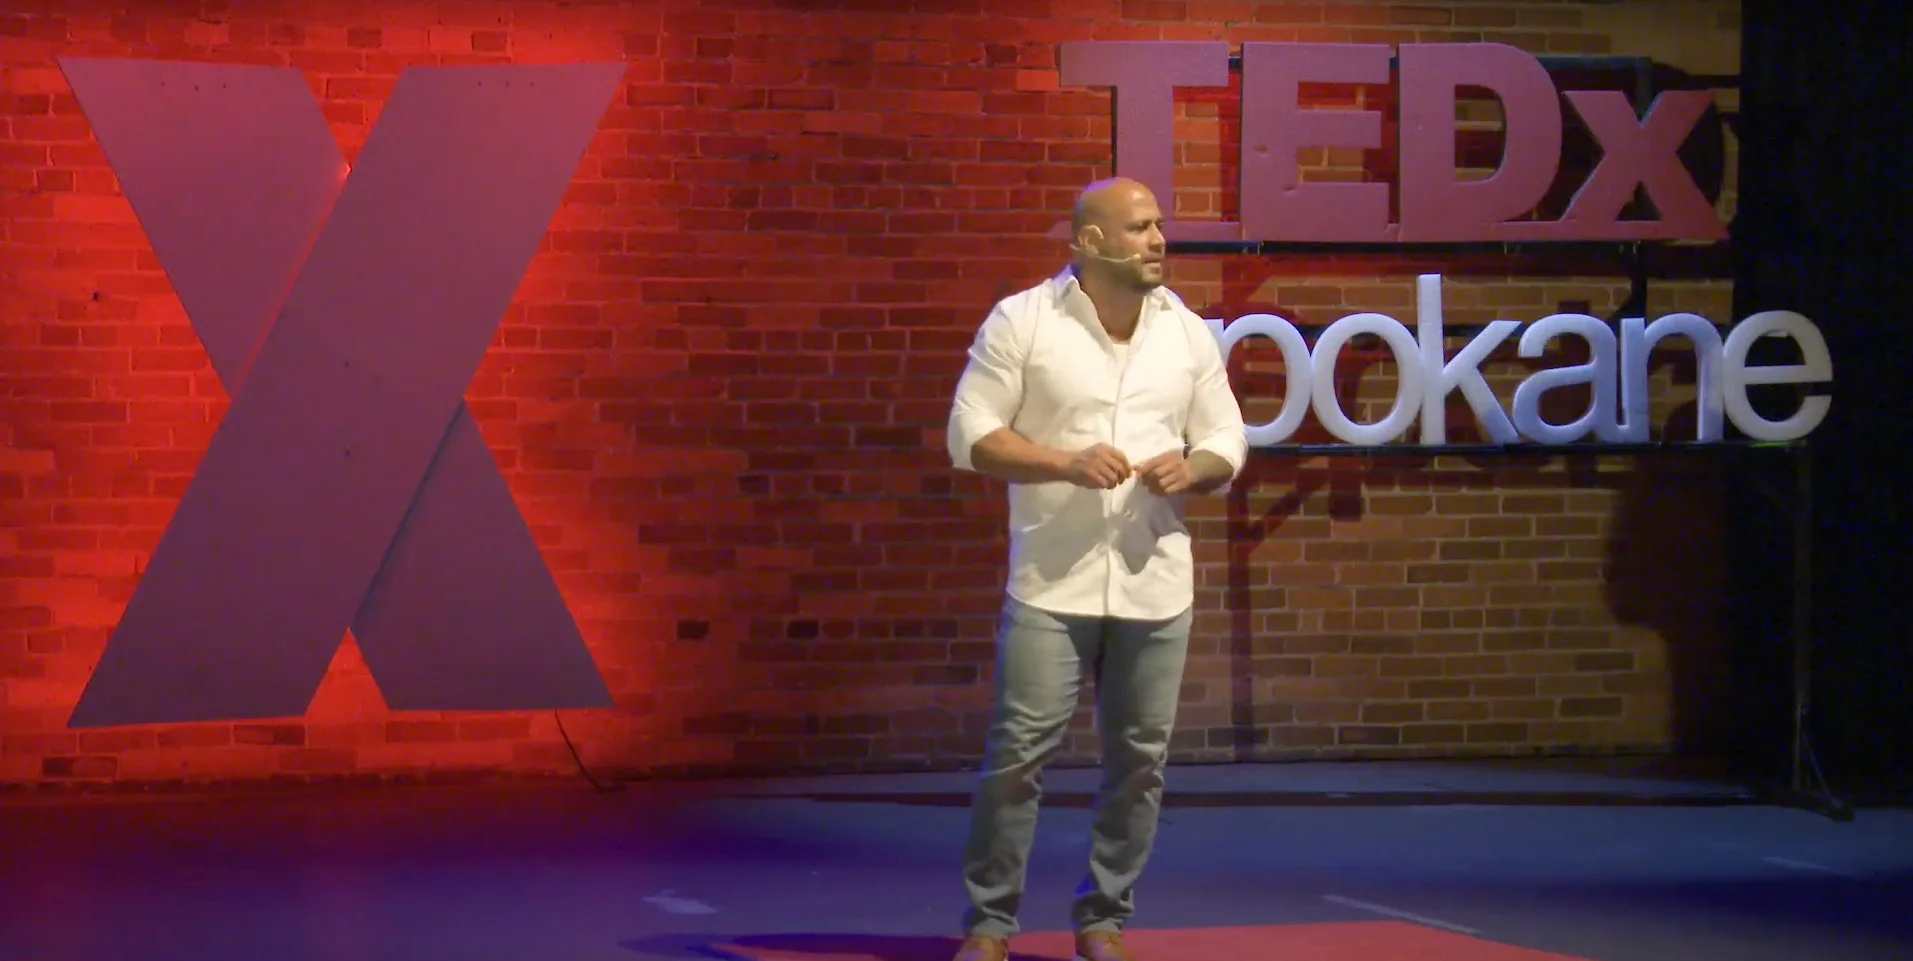 Shawn Kingsbury’s powerful TEDx talk on addiction, homelessness, and incarceration